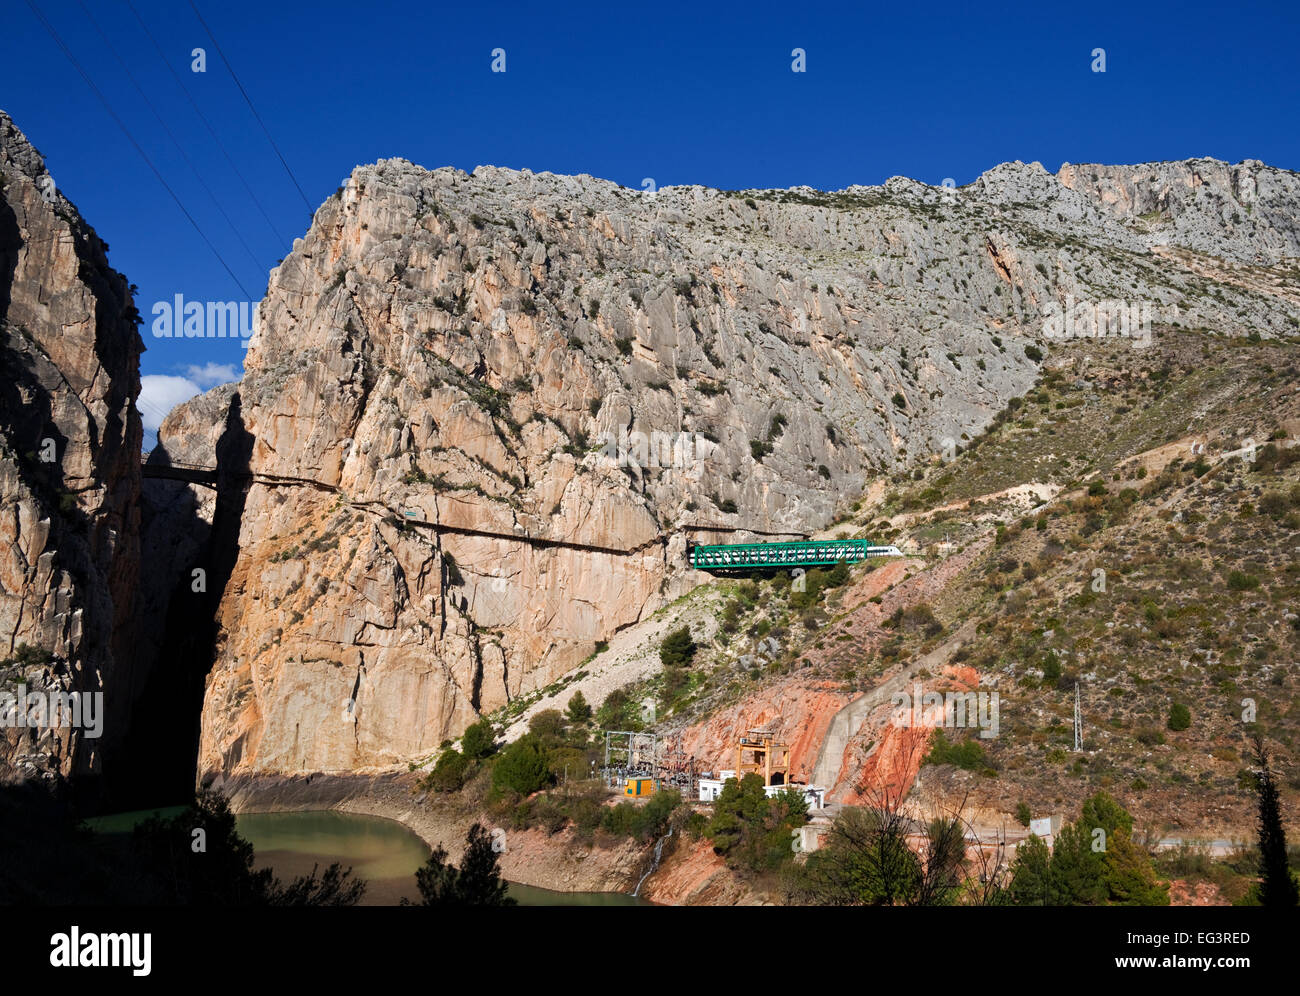 Zug beenden Tunnel in der Nähe von El Caminito del Rey, die entlang der rechten Klippe, El Chorro, Provinz Malaga, Andalusien, Spanien Stockfoto